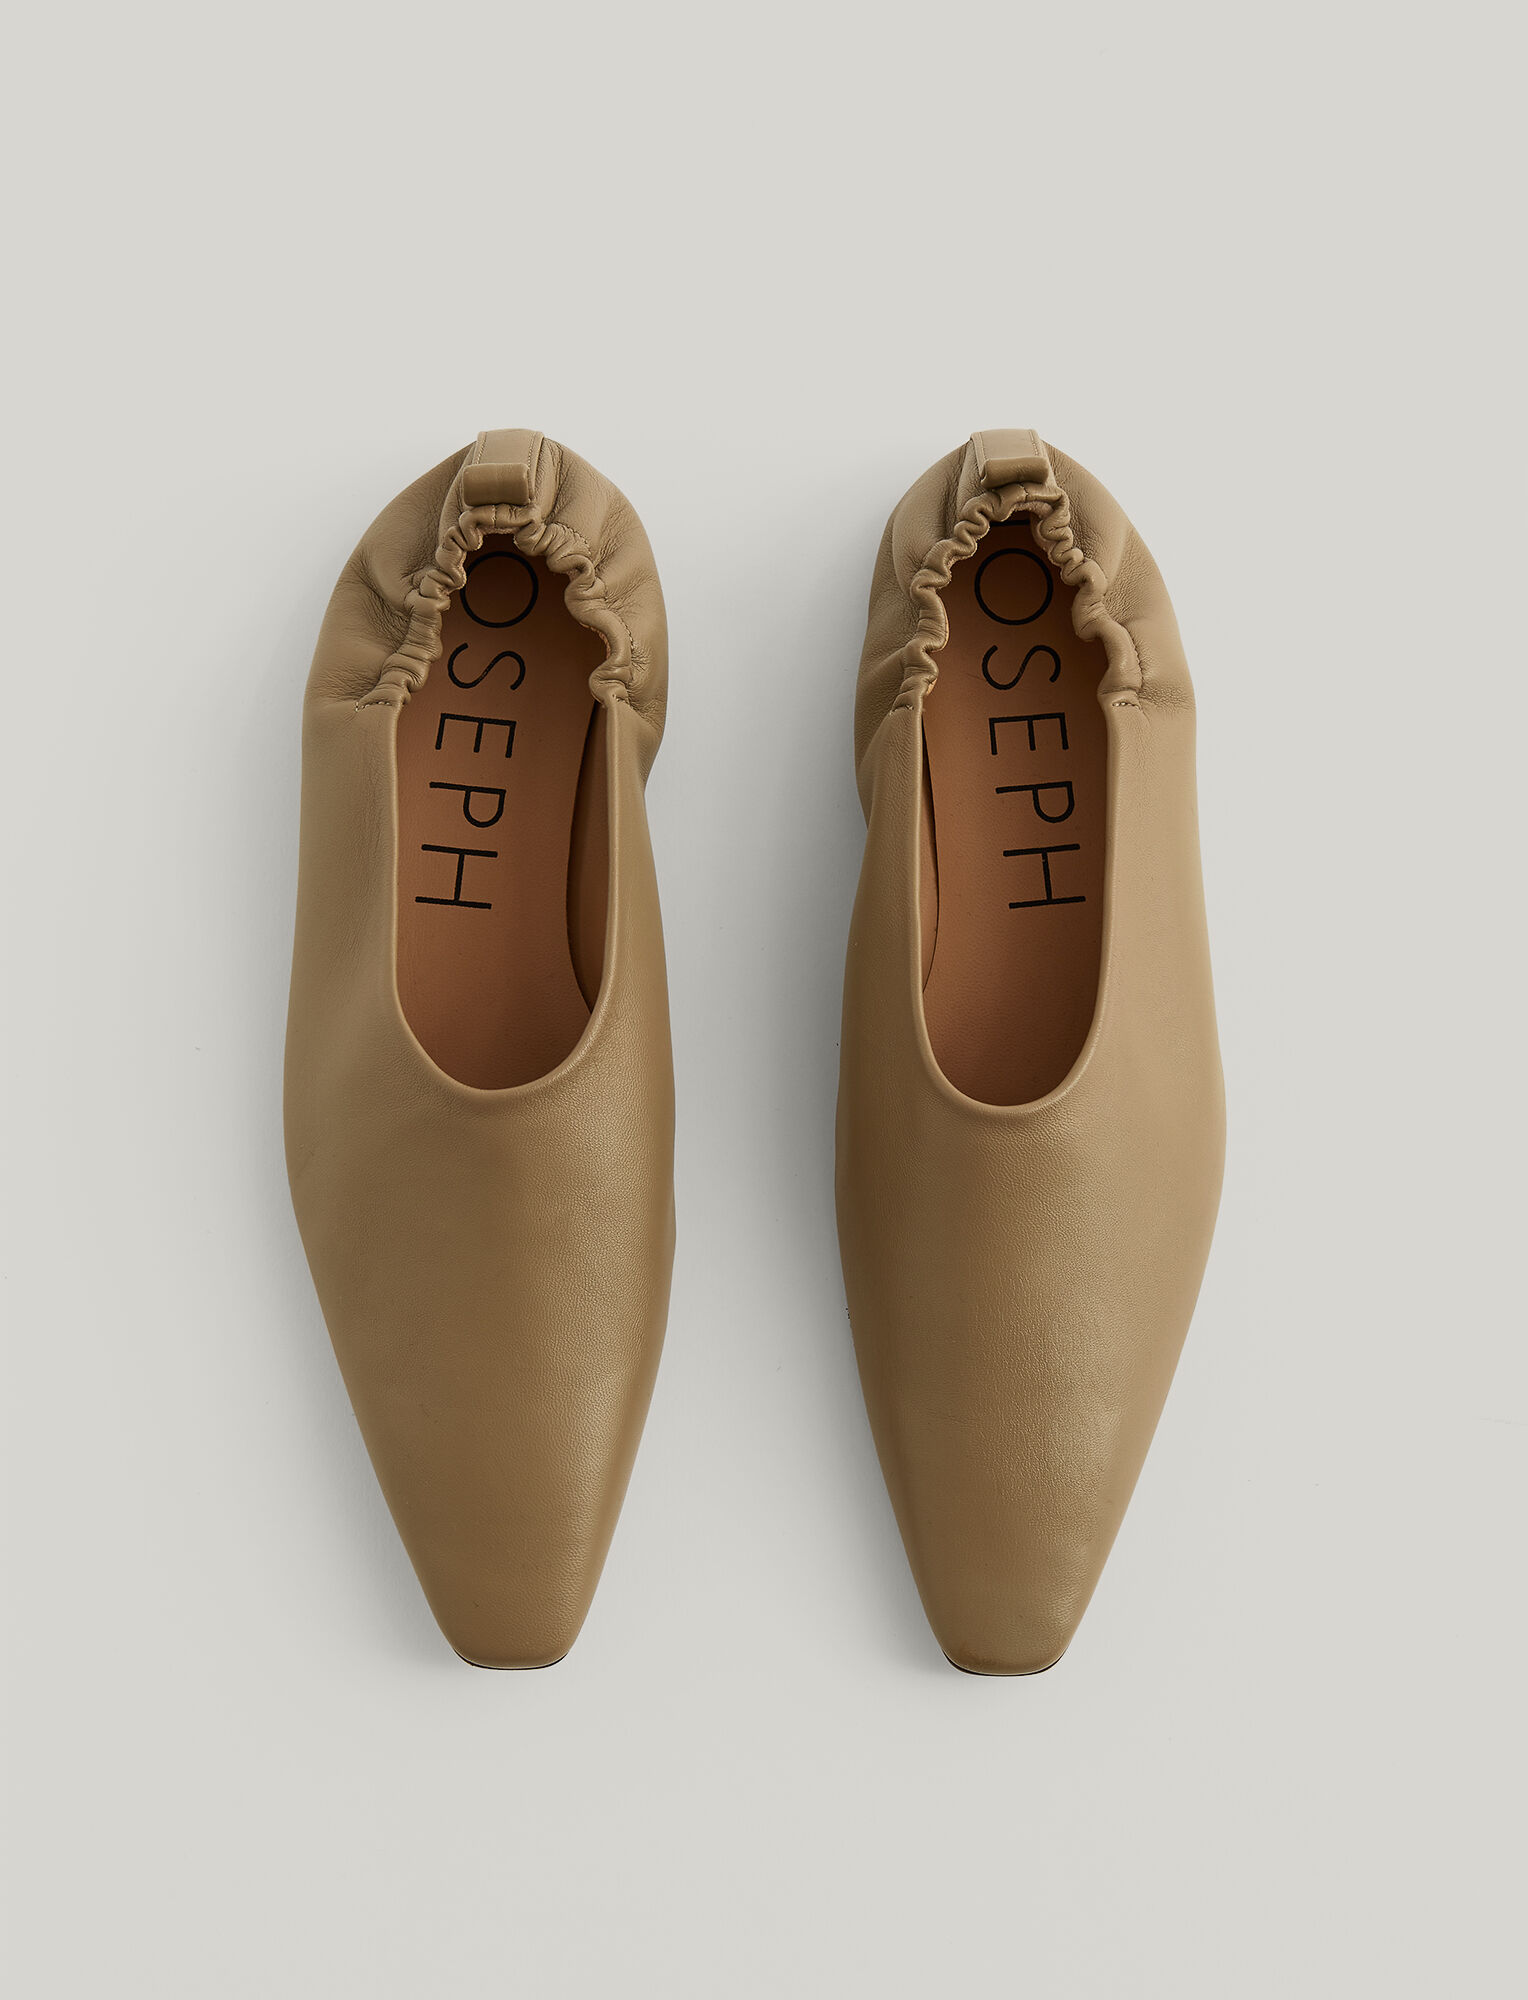 Joseph, Pointy Square Ballerina Shoes, in MASTIC